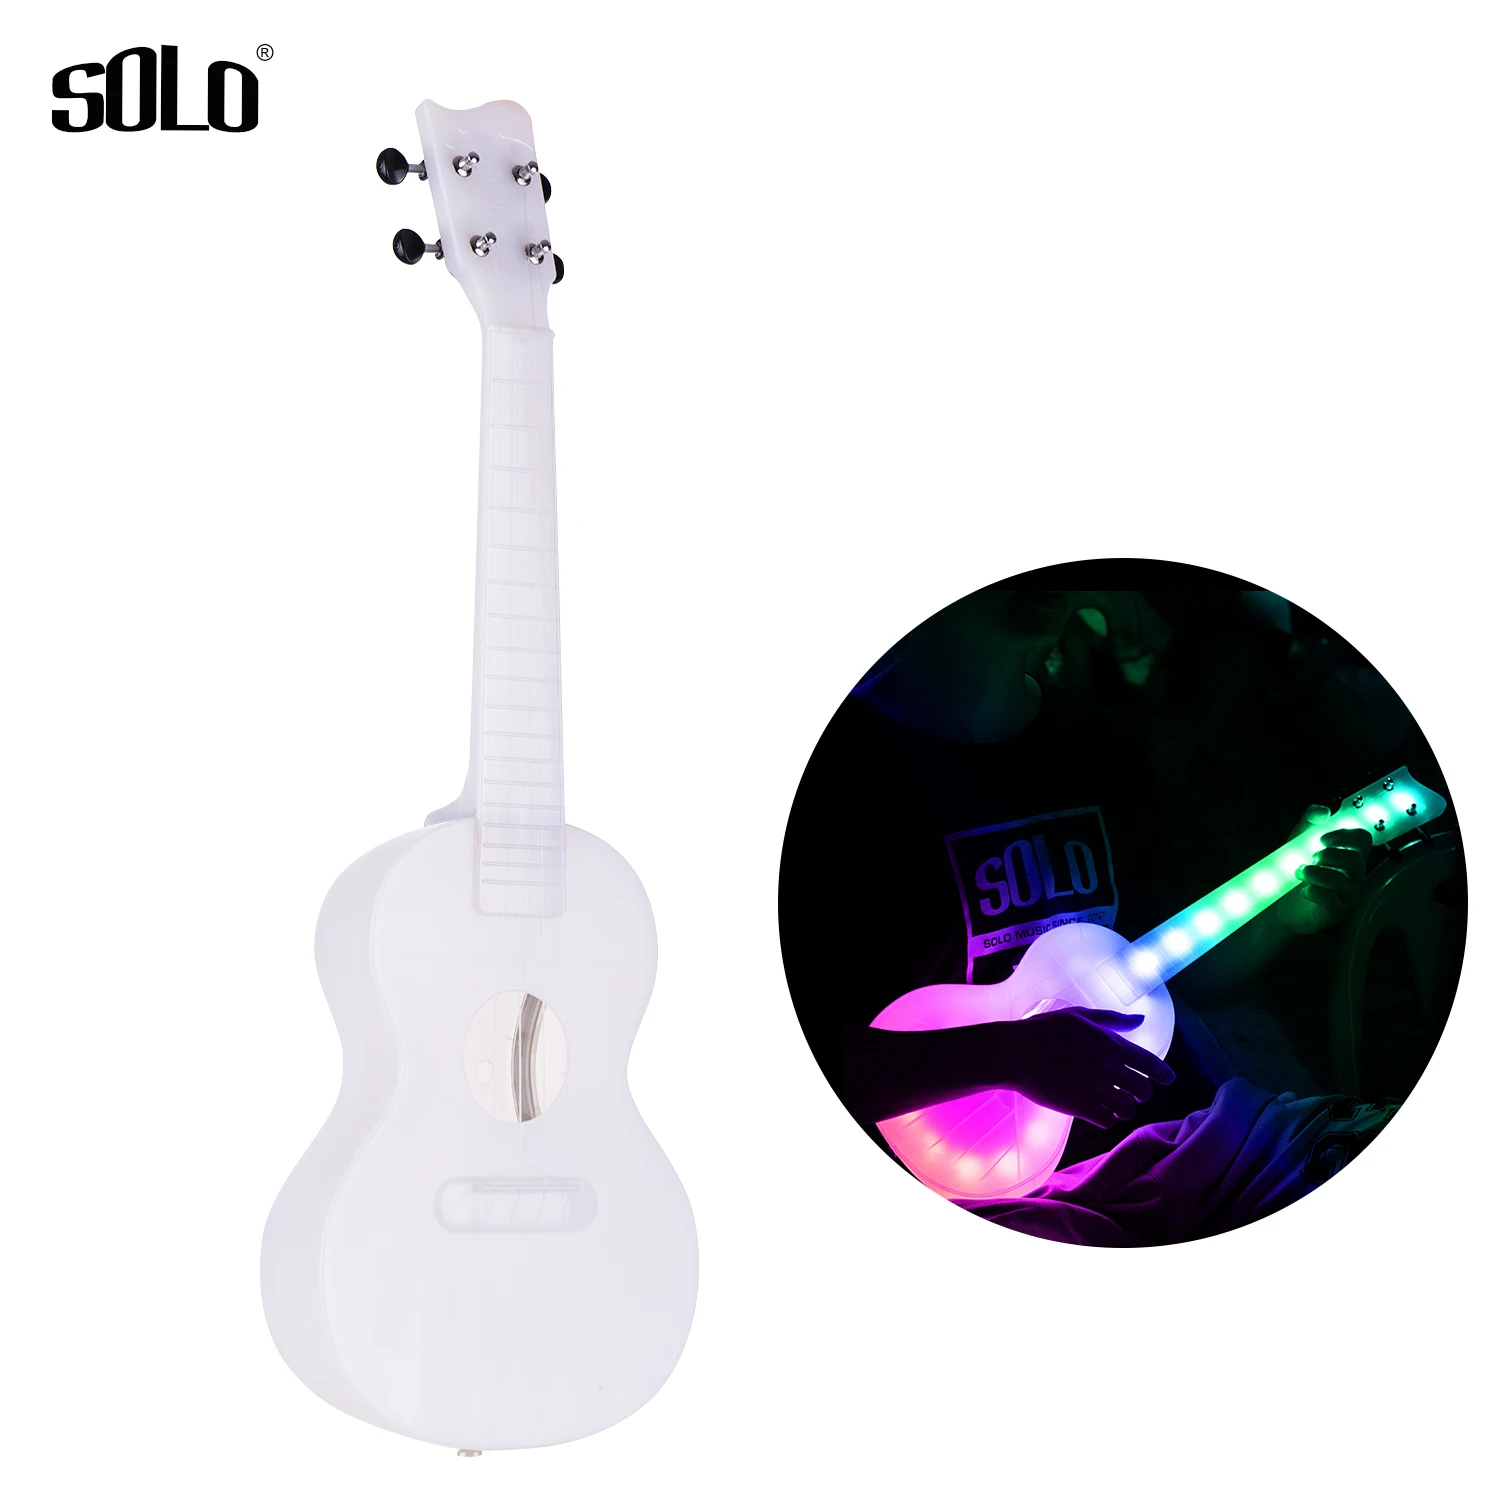 

SOLO SU-30 23 Inch Concert Ukulele Colorful LED Lighting Smart Ukelele Uke Carbon Strings with Gig Bag USB Charging Cable New